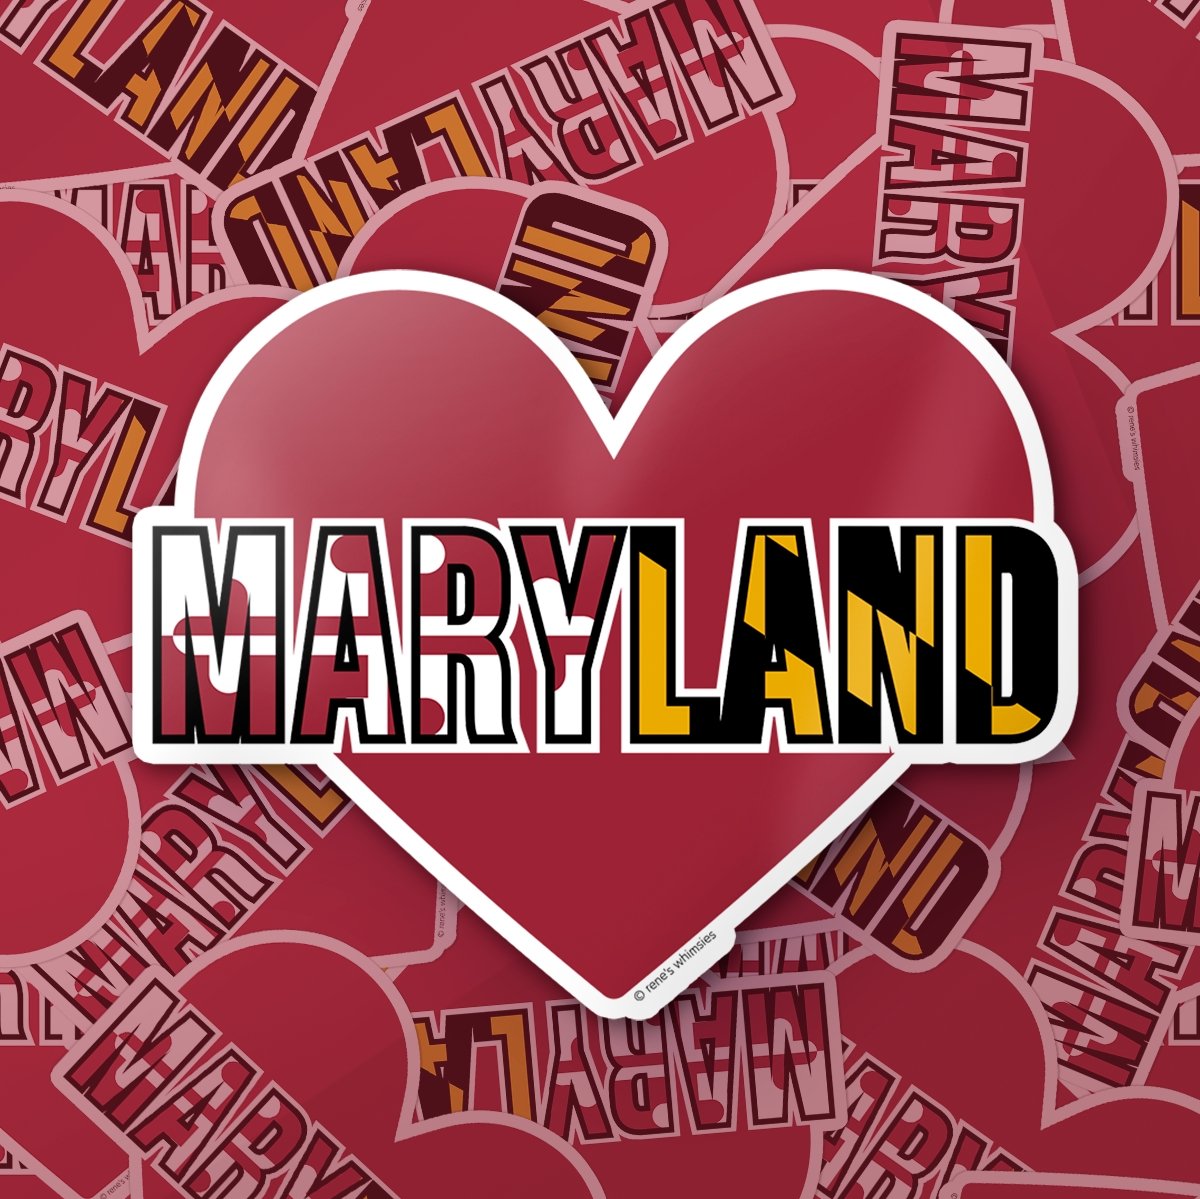 Love Maryland Sticker - StickersRene's Whimsies